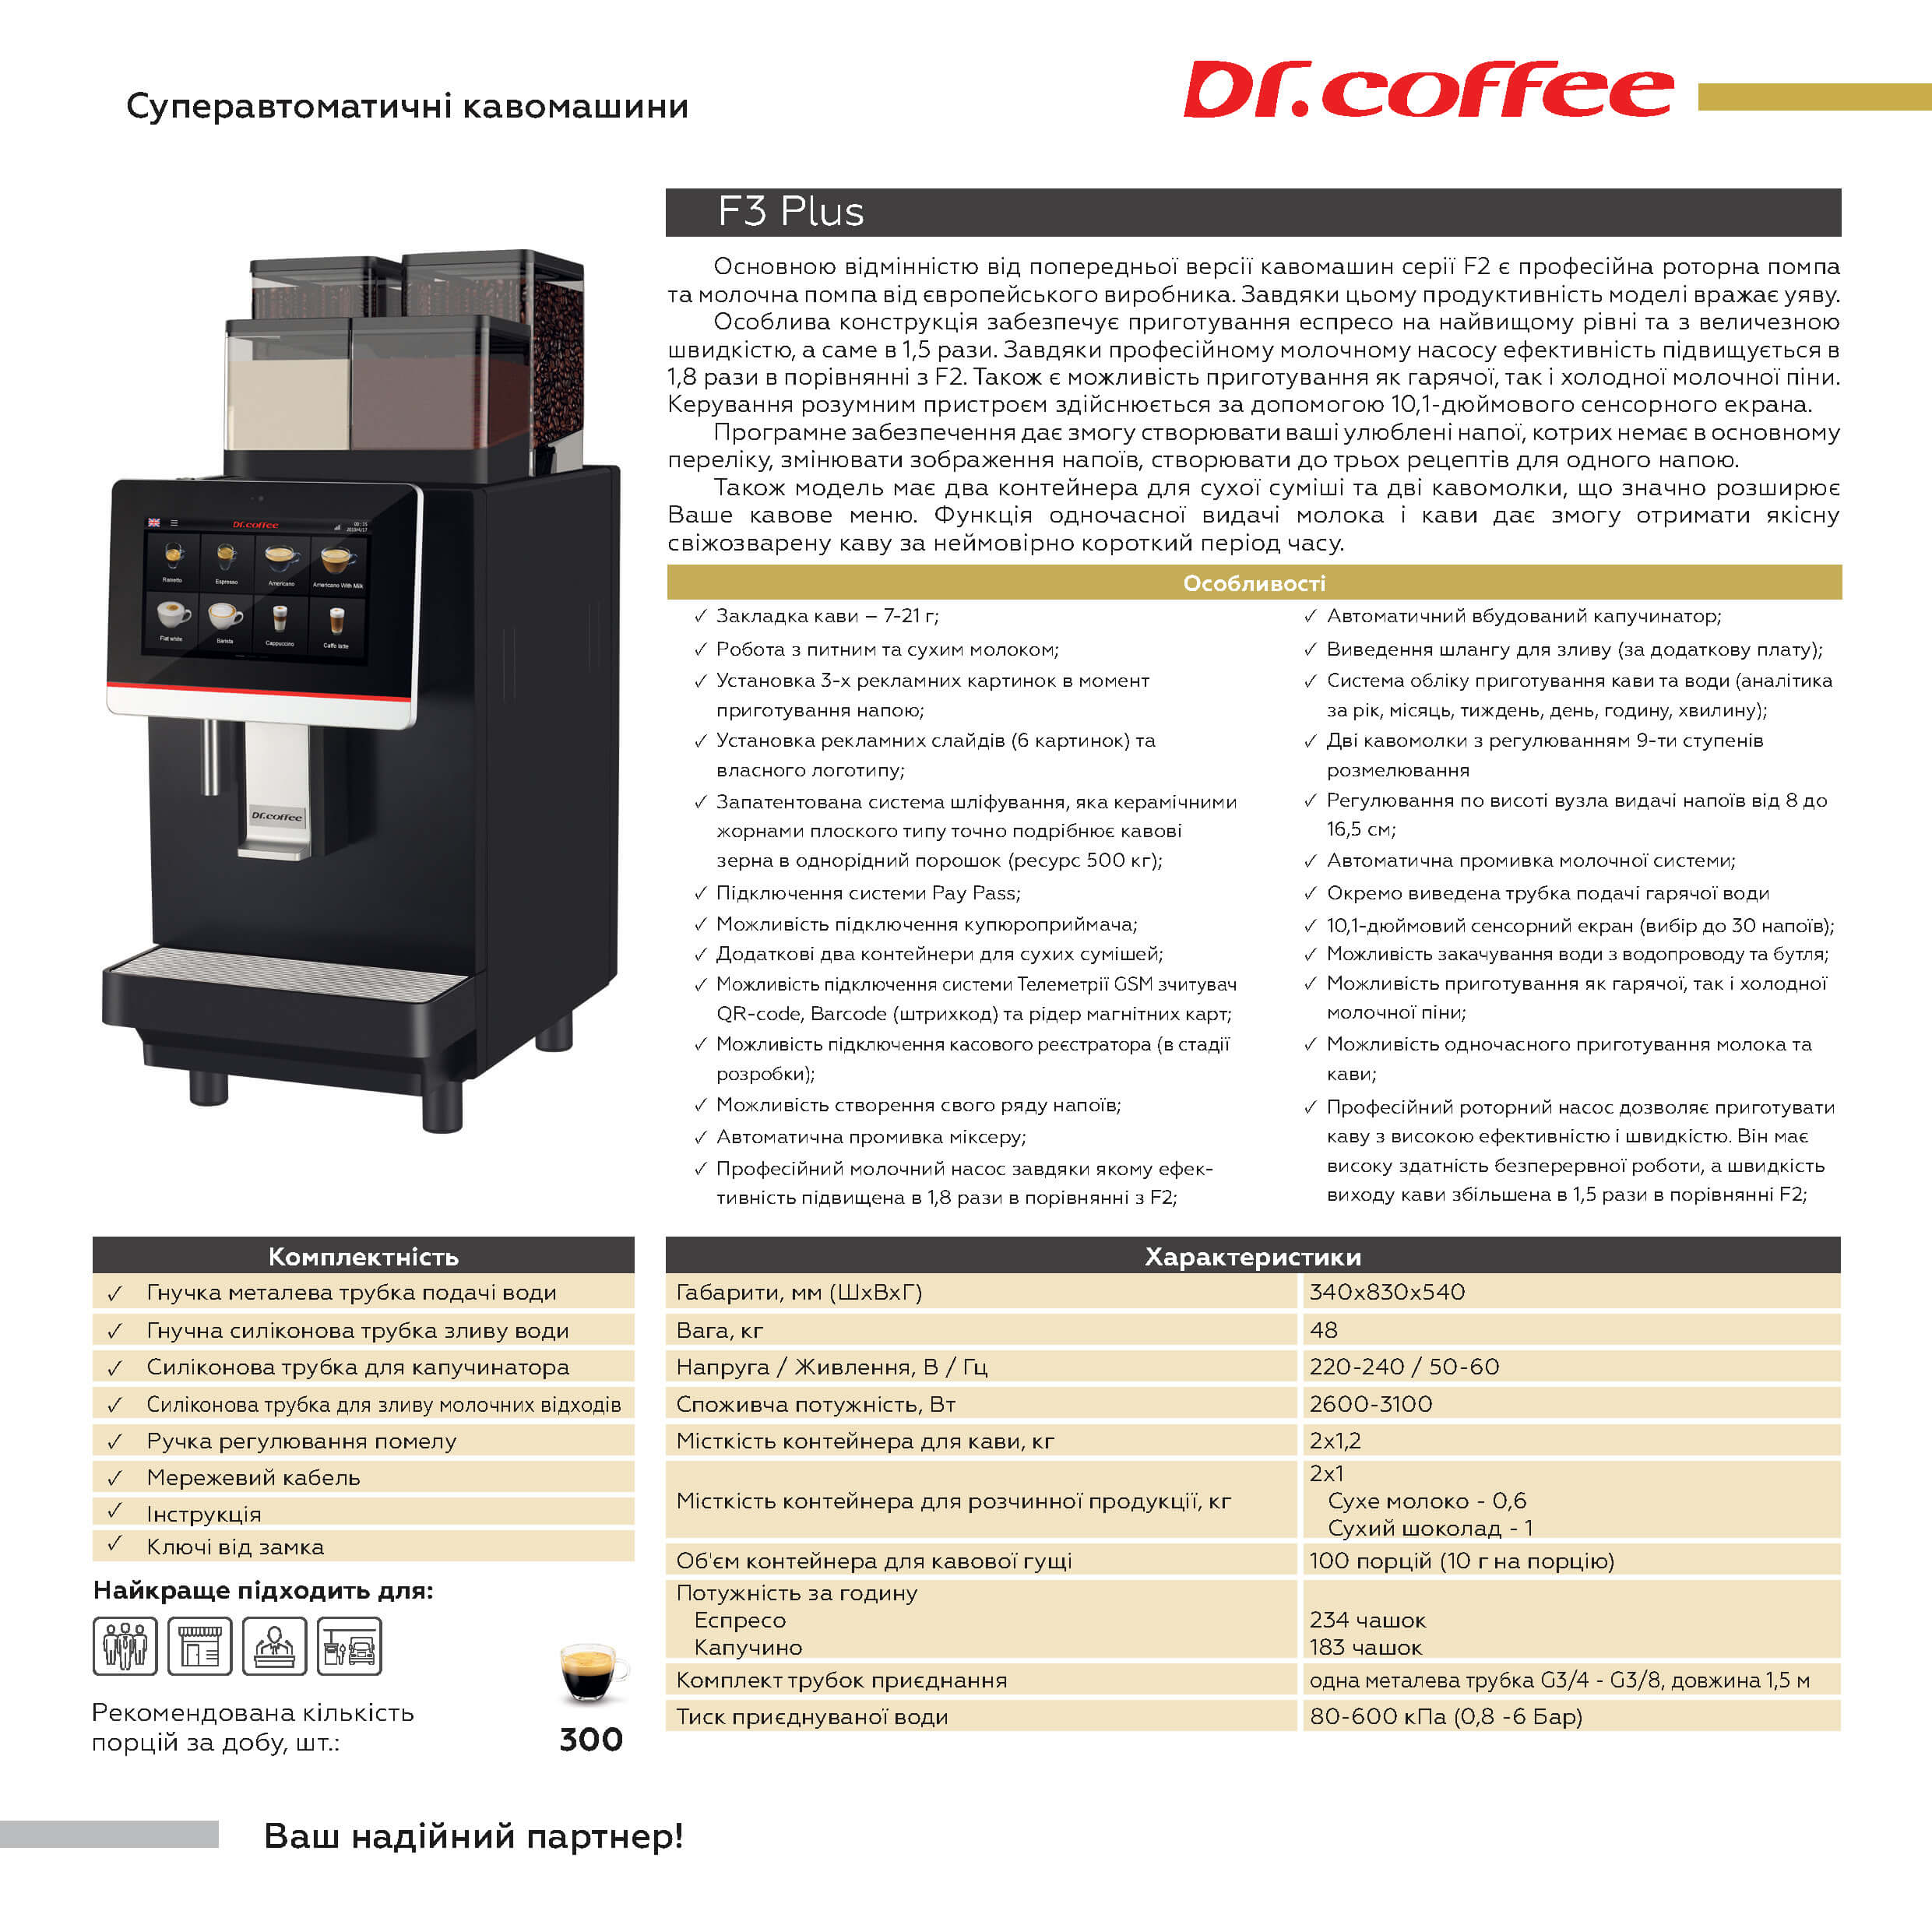 oborudovanie Dr.Coffee oil market Page 3 1